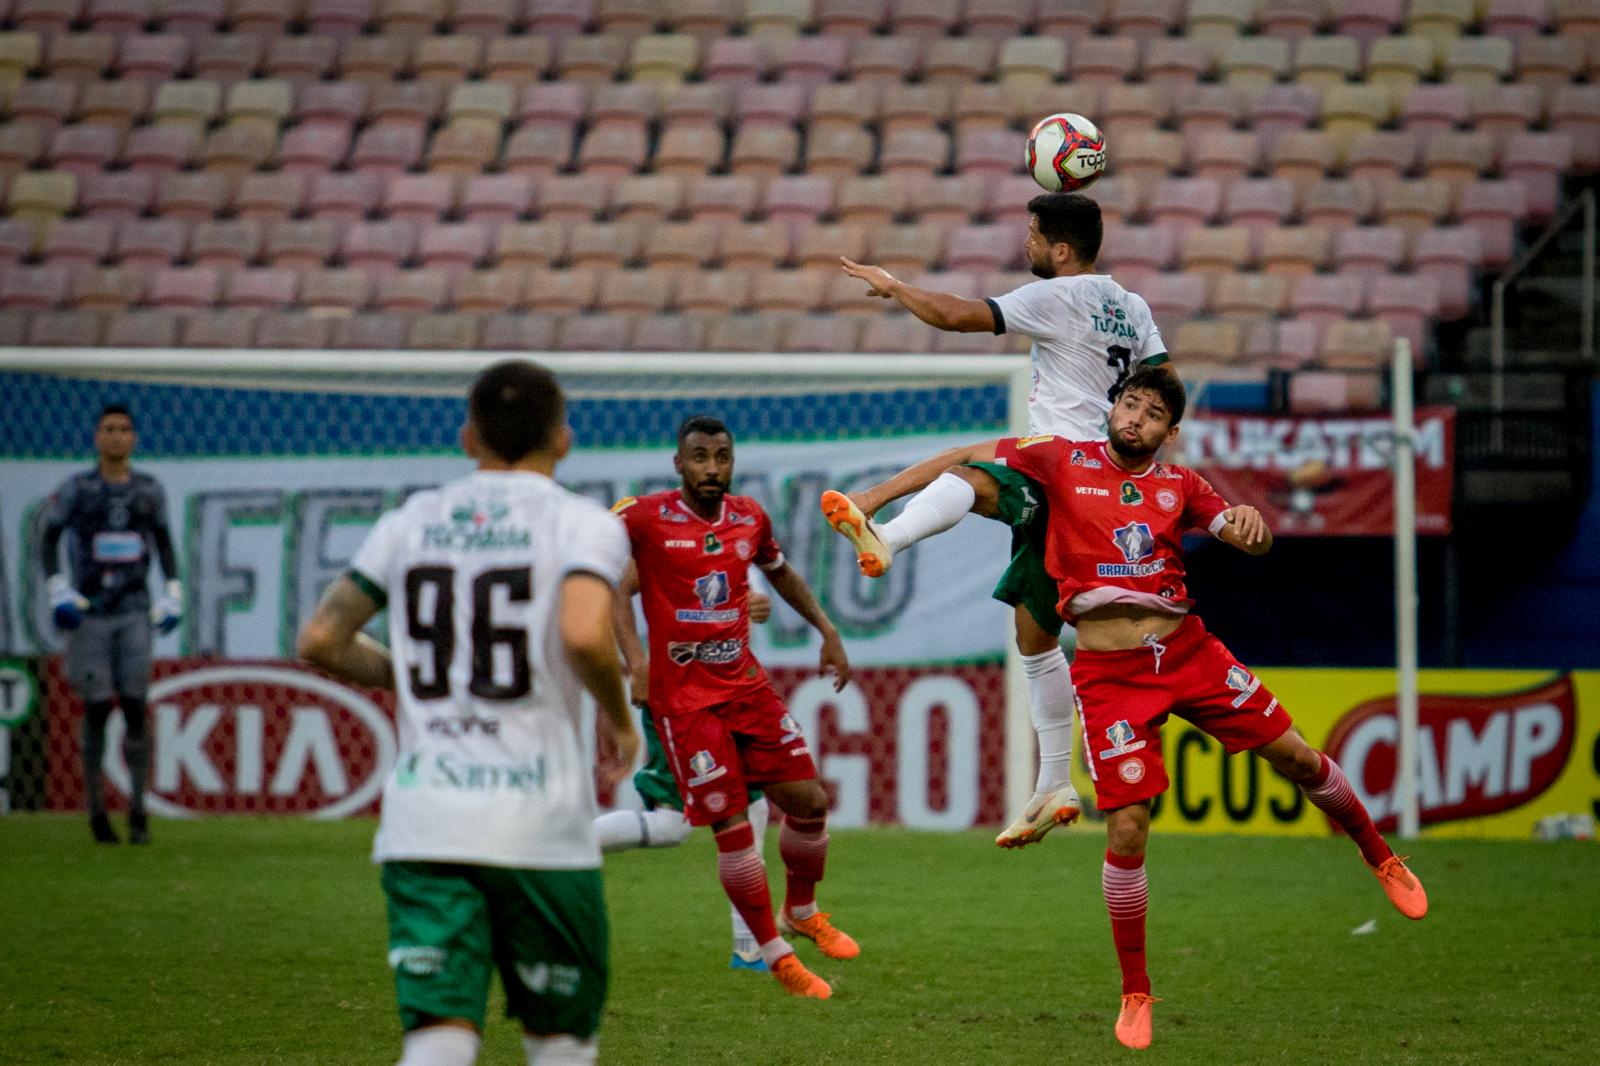 Duelo eletrizante, Manaus FC enfrenta Tombense neste sábado